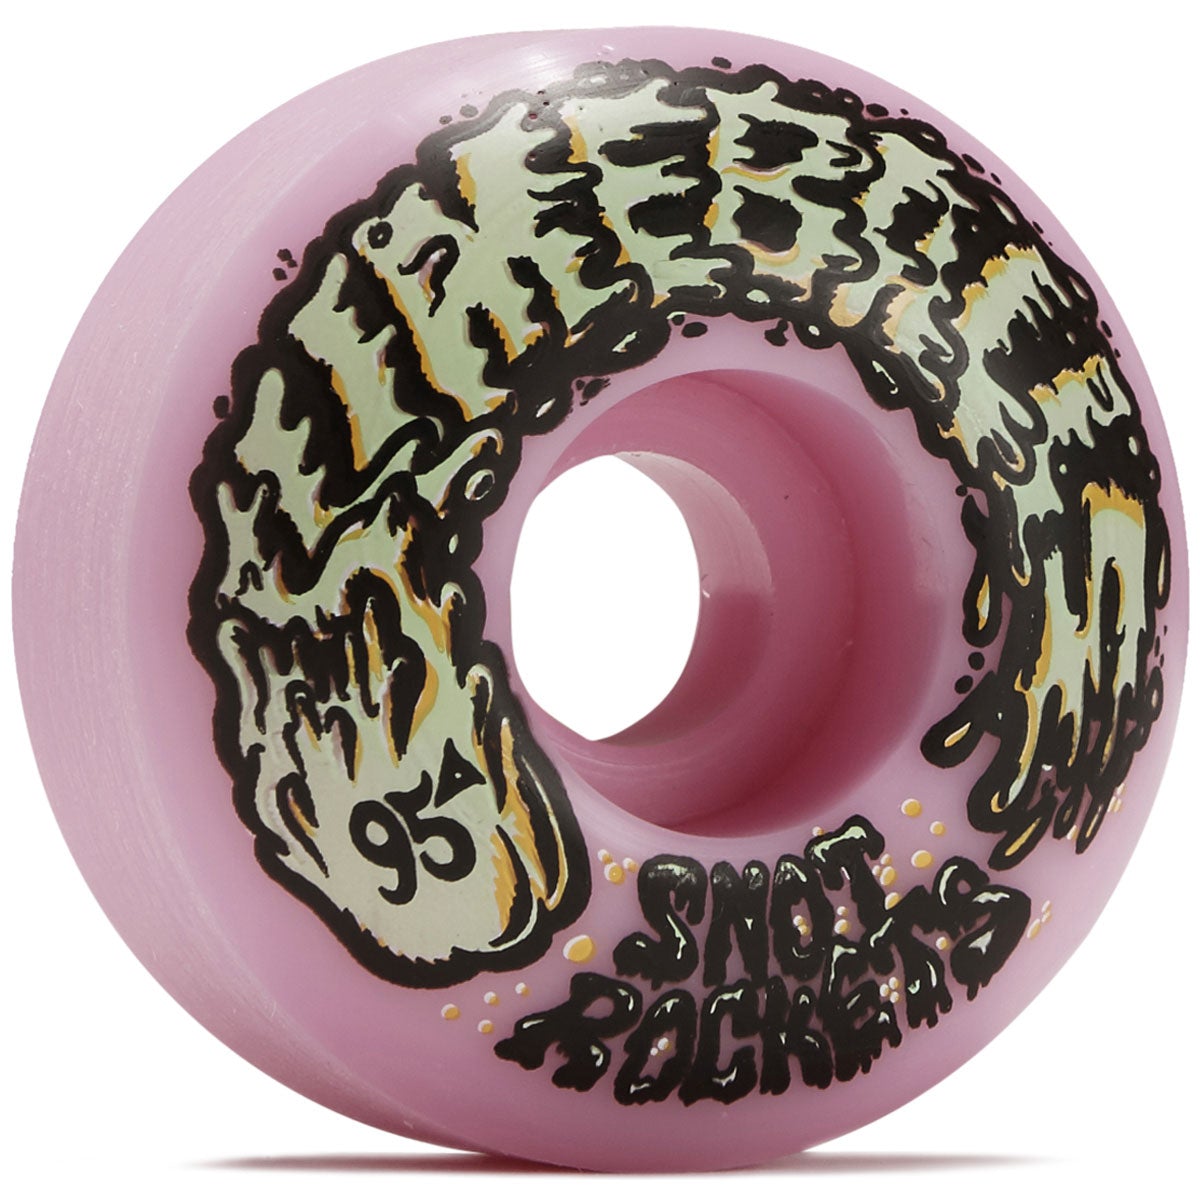 Slime Balls Snot Rockets 95a Skateboard Wheels - Pastel Pink - 54mm